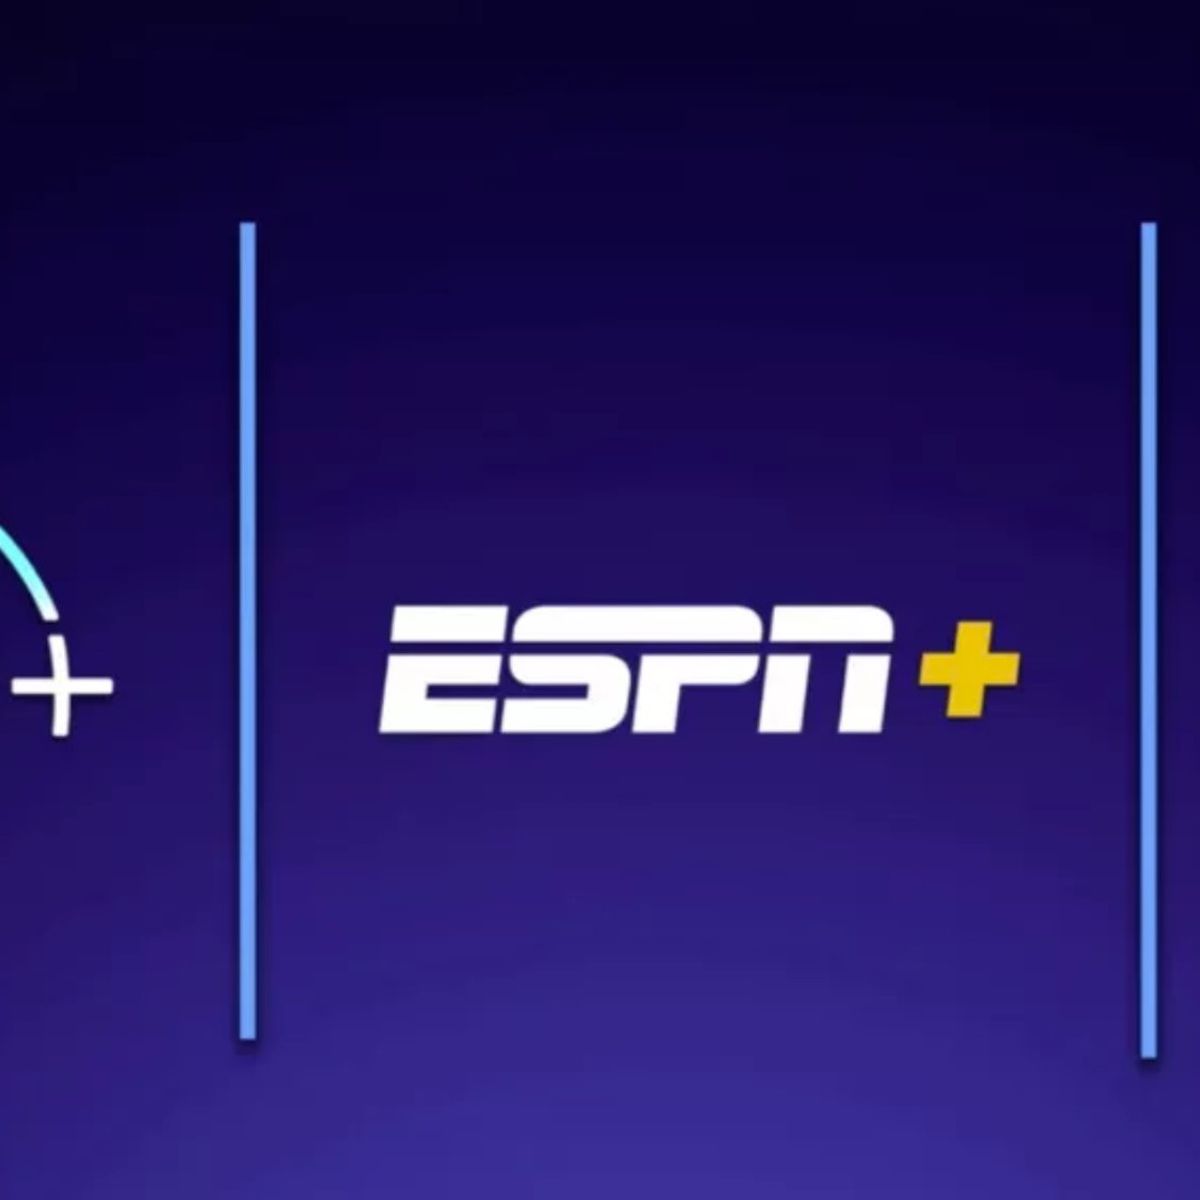 Parallel graphics of Disney Plus, ESPN Plus and Hulu logos